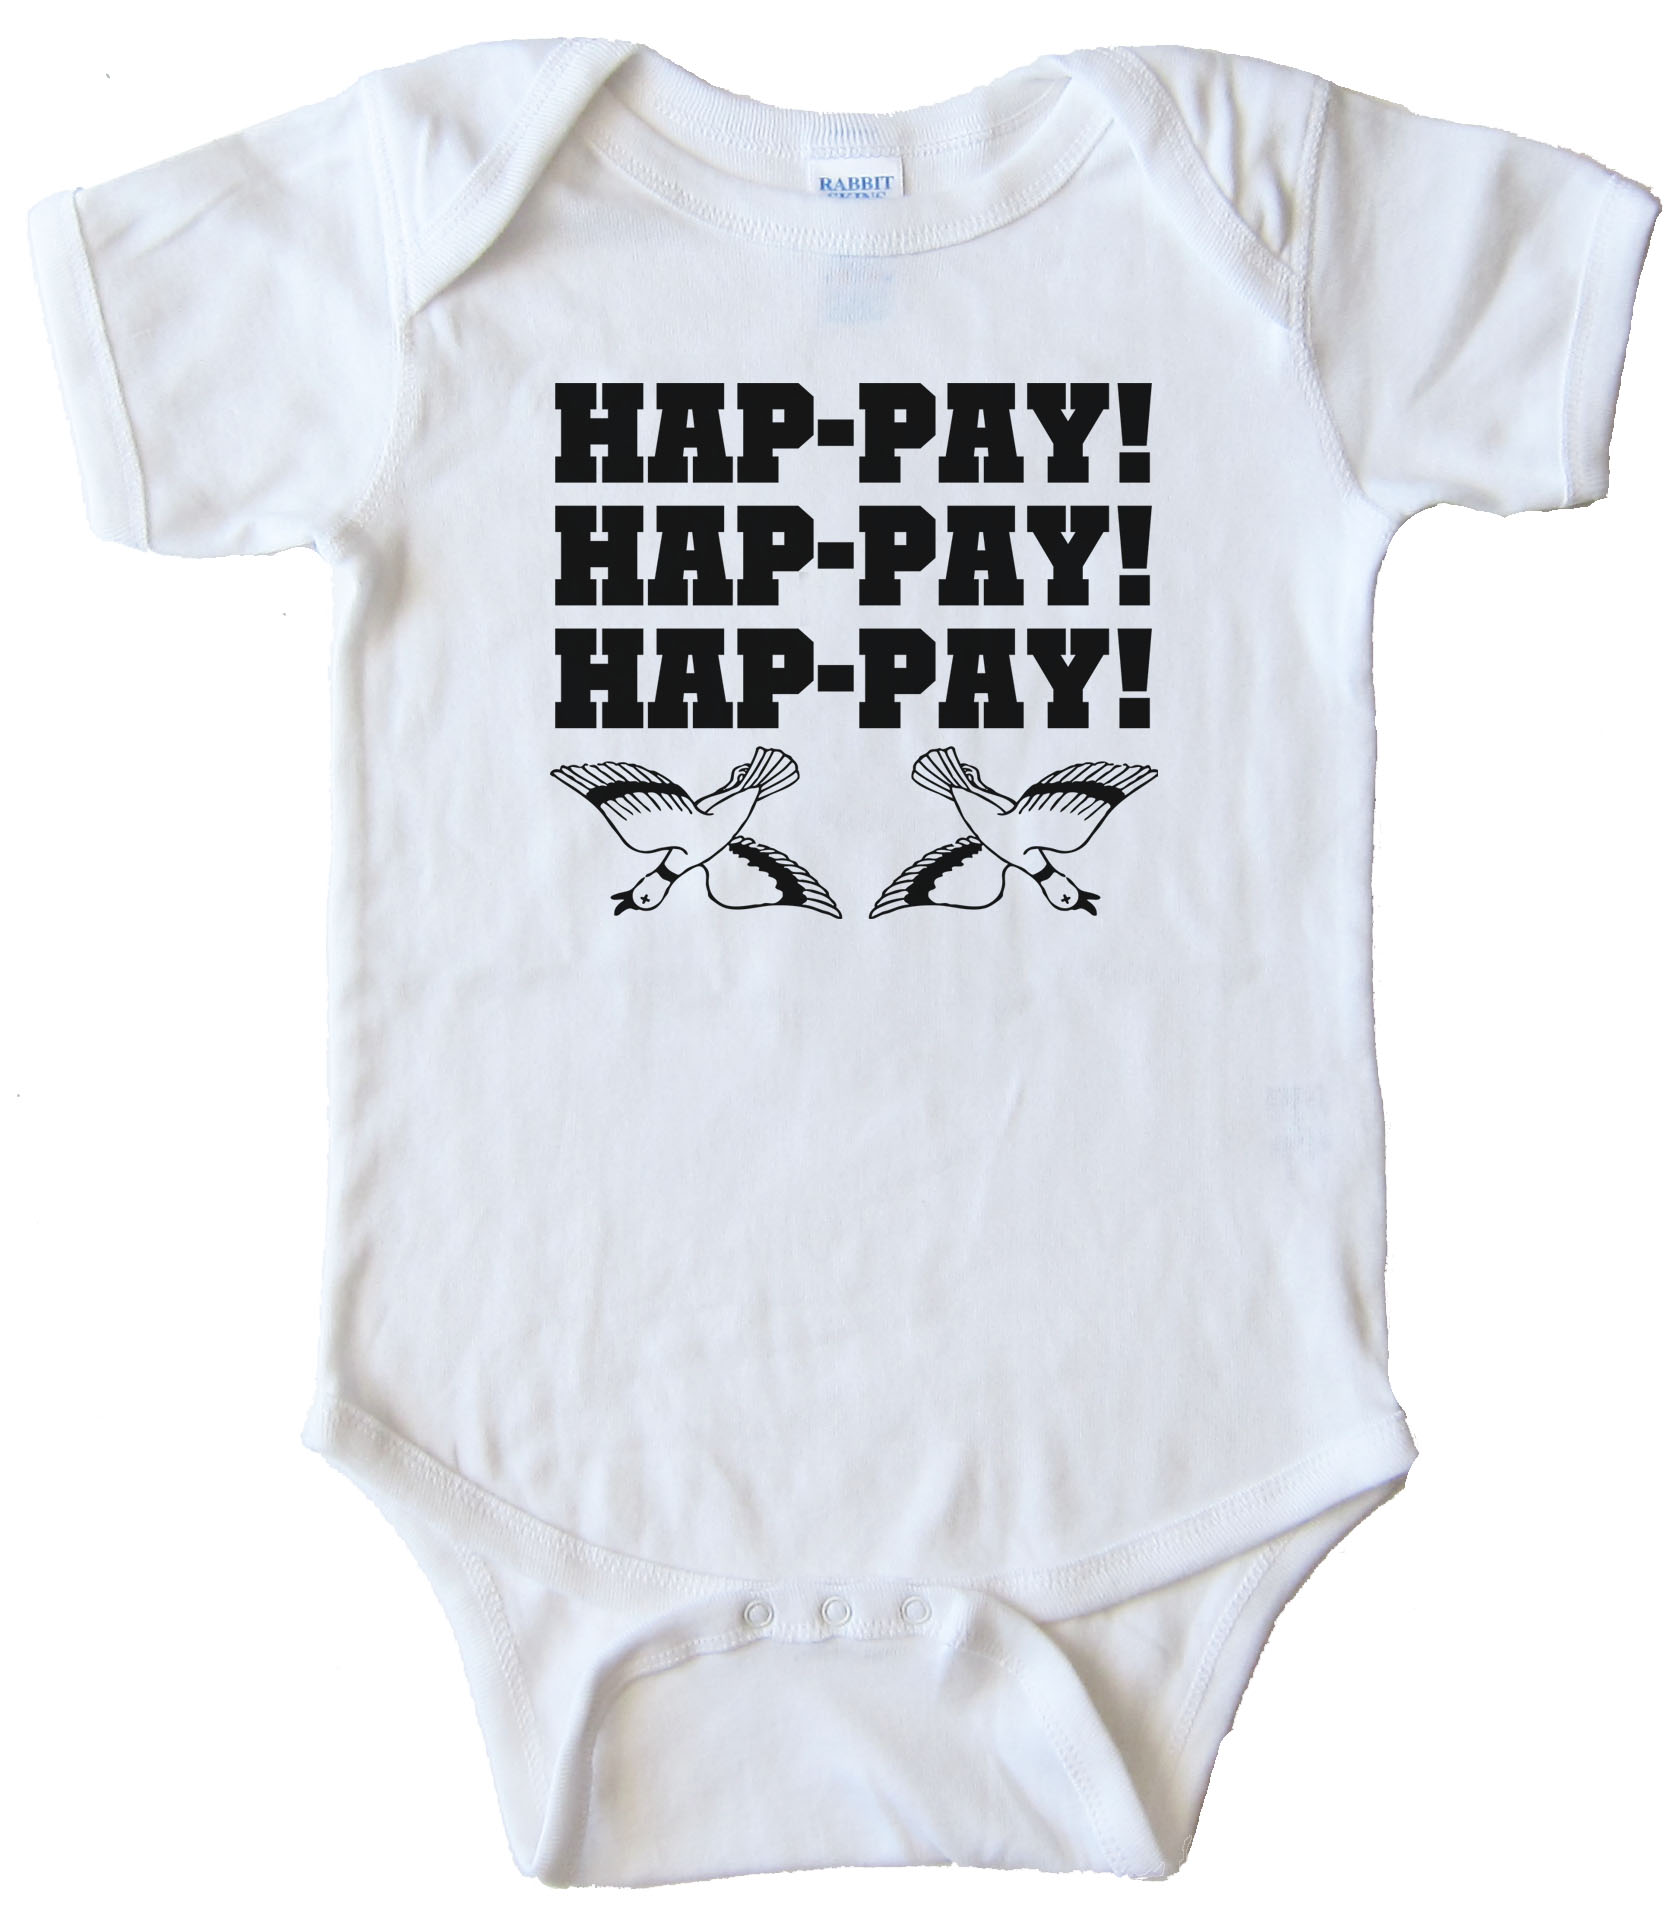 Happy Happy Happy Baby Bodysuit Duck Dynasty